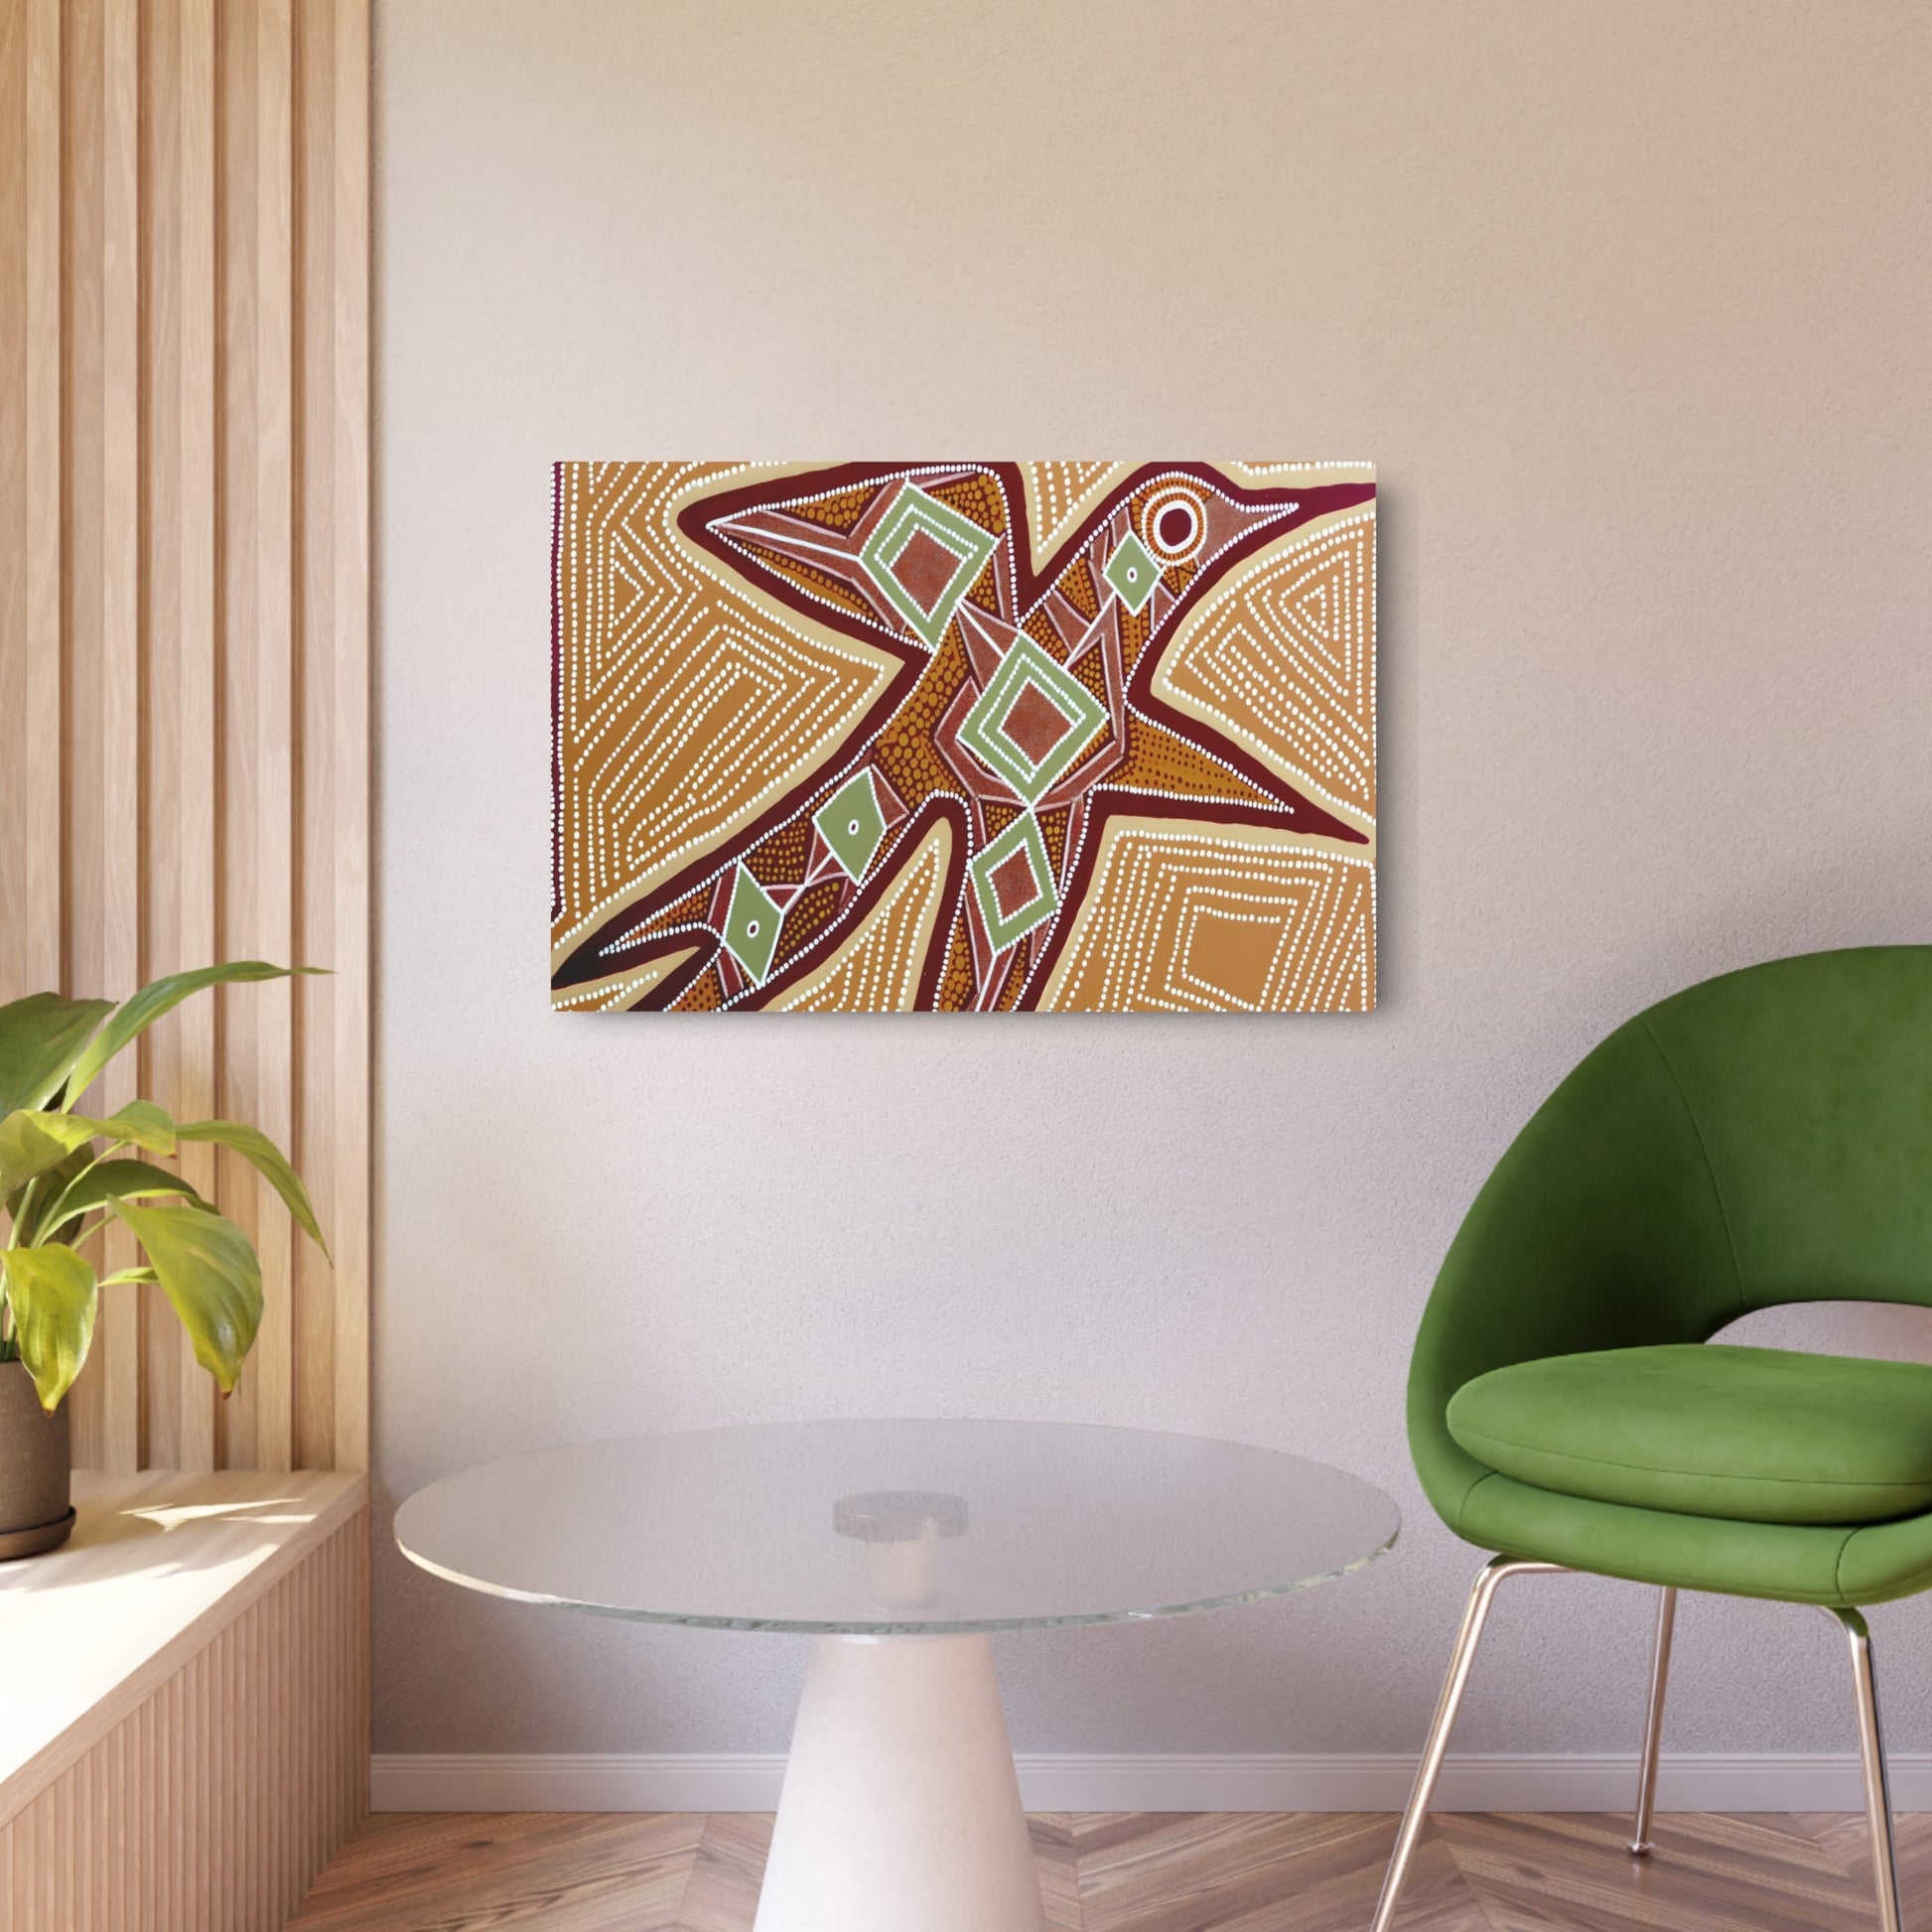 Metal Poster Art | "Australian Aboriginal Art Inspired Bird Image - Dot Painting & Earth-Tone Patterns in Non-Western & Global Styles" - Metal Poster Art 36″ x 24″ (Horizontal) 0.12''